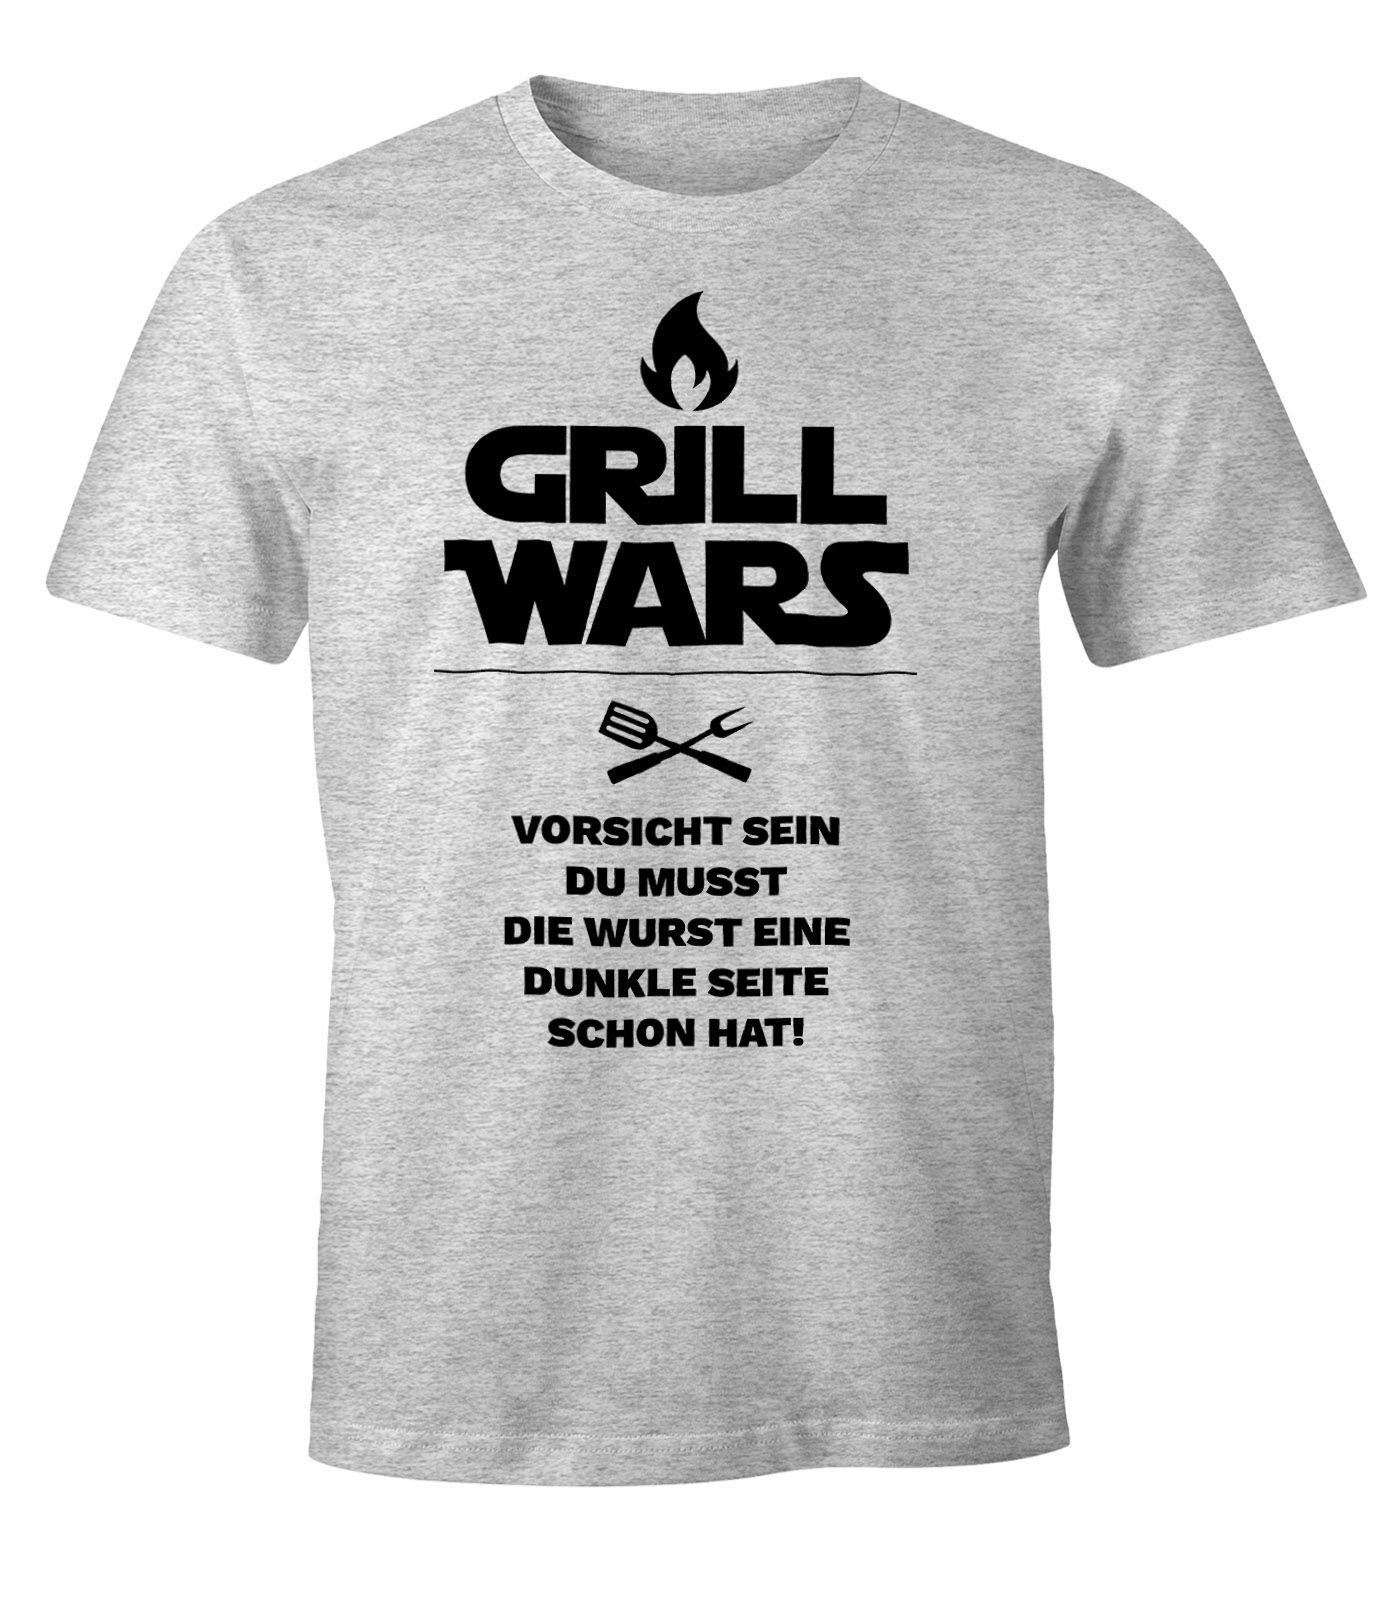 Fun-Shirt MoonWorks Print Spruch Moonworks® grau Herren T-Shirt mit Print-Shirt Grill Wars mit